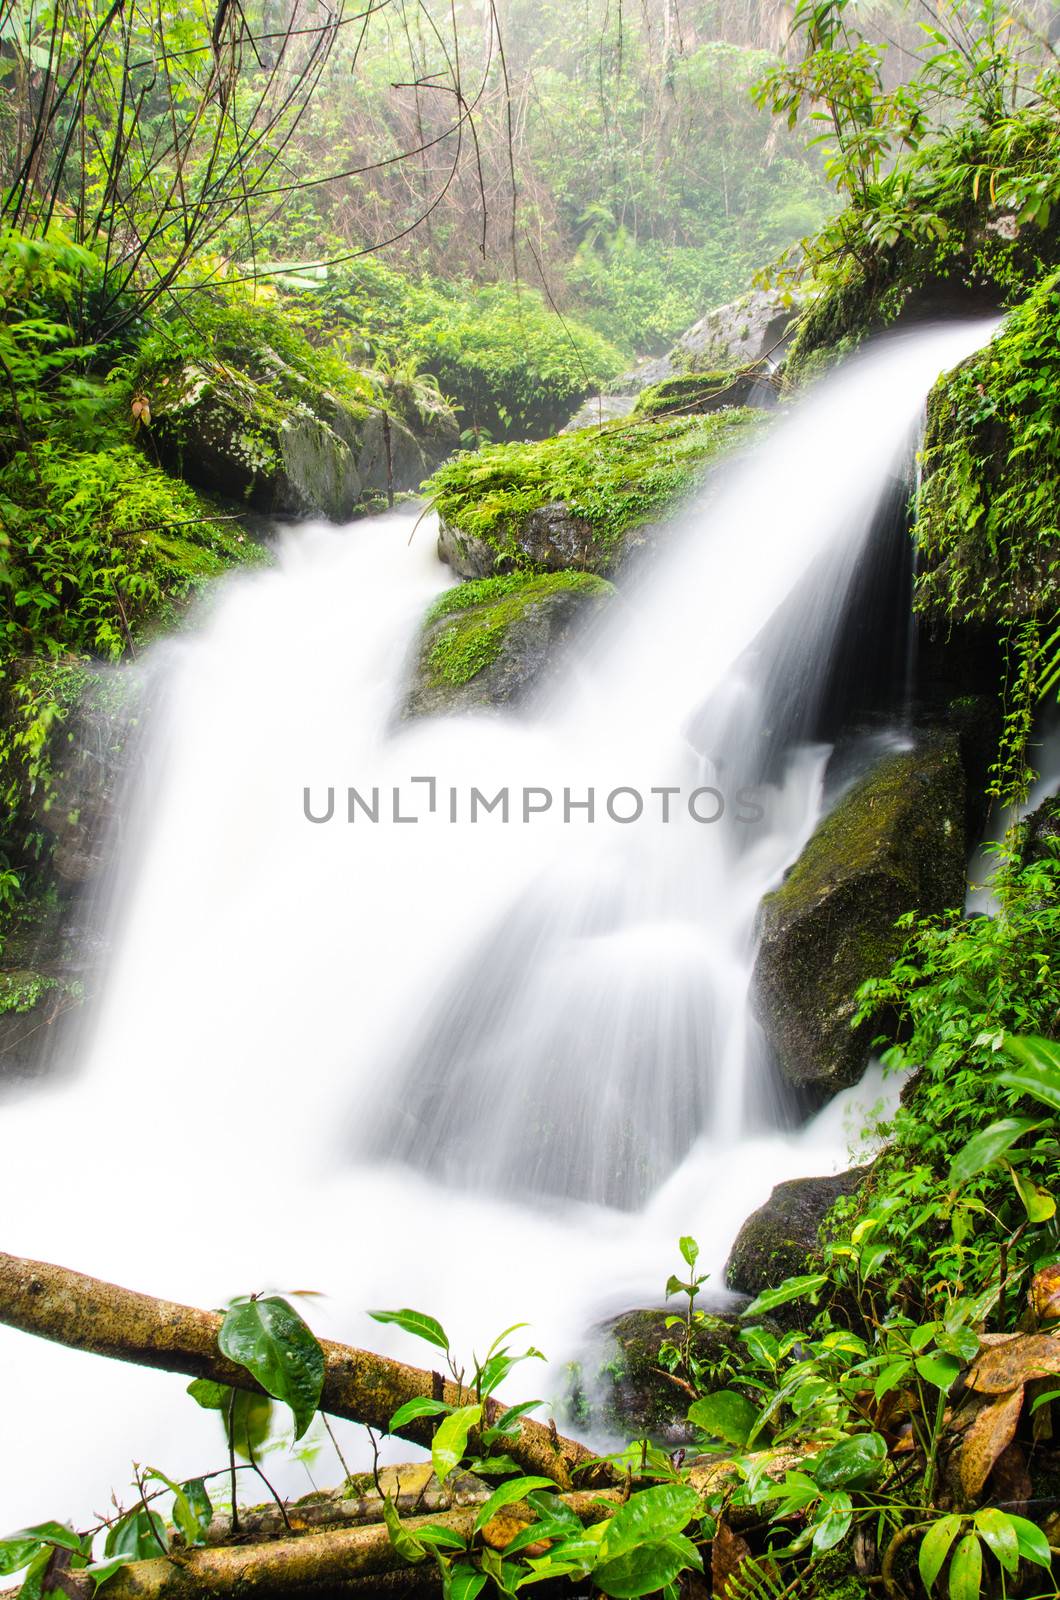 Rom Klao - Pharadorn Waterfall in rain forest, Thailand.